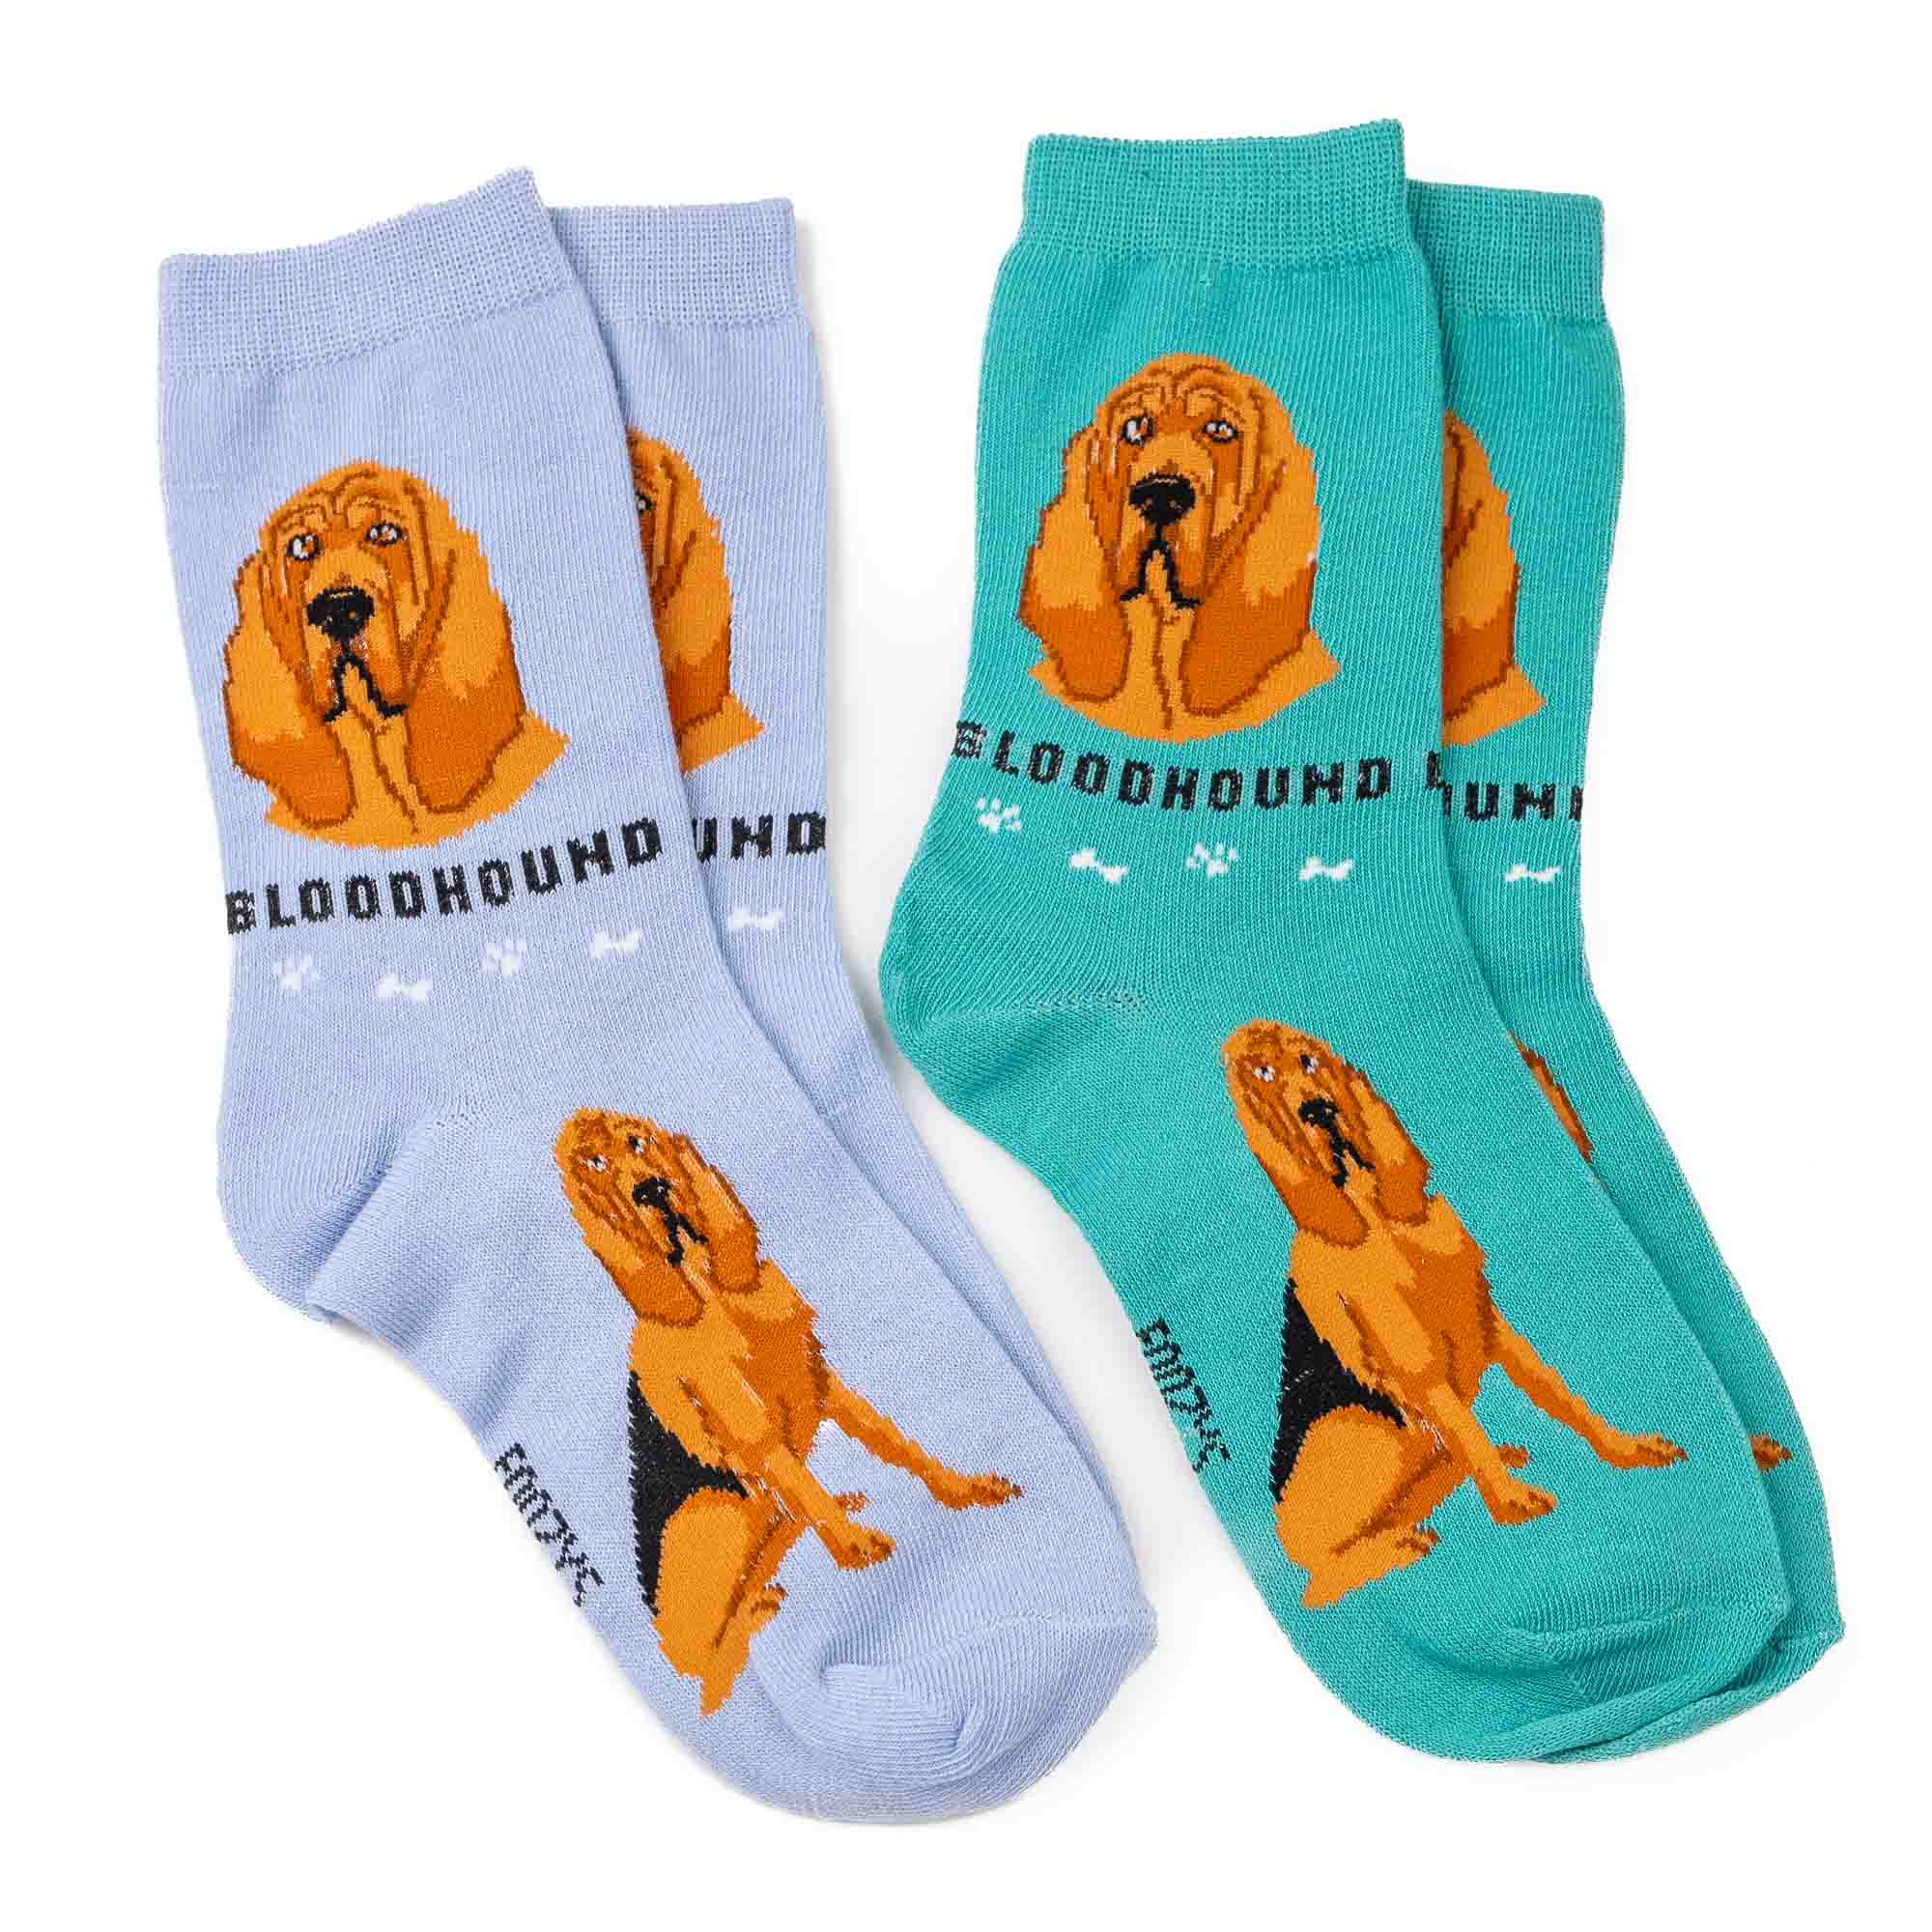 My Favorite Dog Breed Socks ❤️ BloodHound Breed Dog Sock - 2 Set Collection